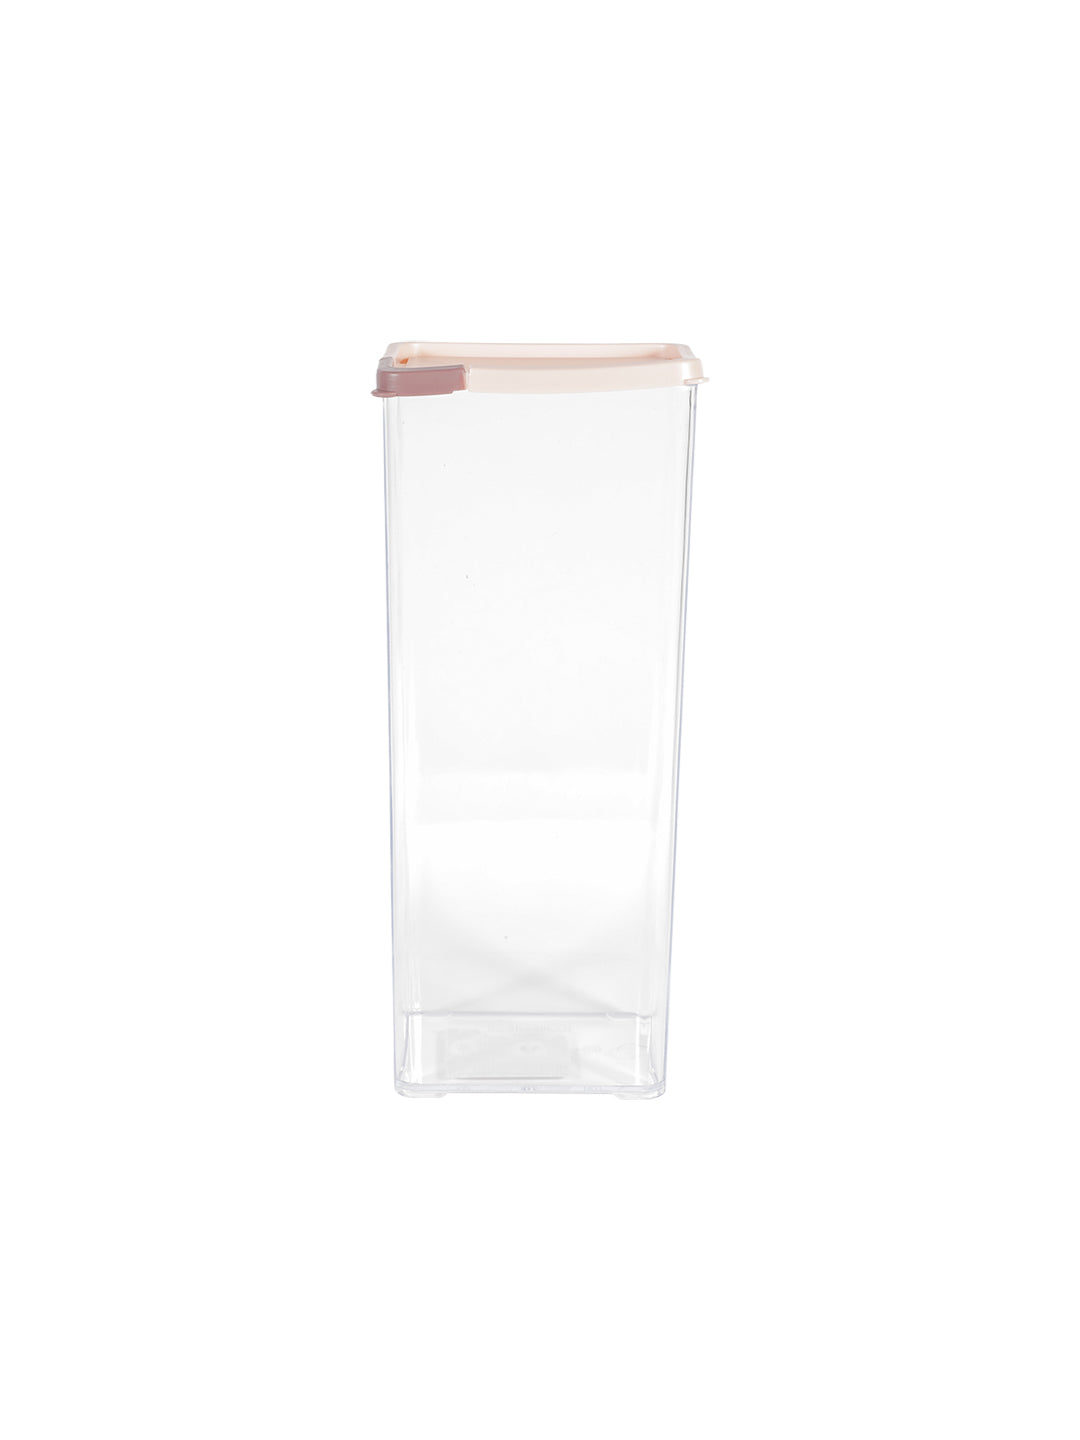 VON CASA Tall Plastic Cereal Dispenser Jar With Lid - Pink